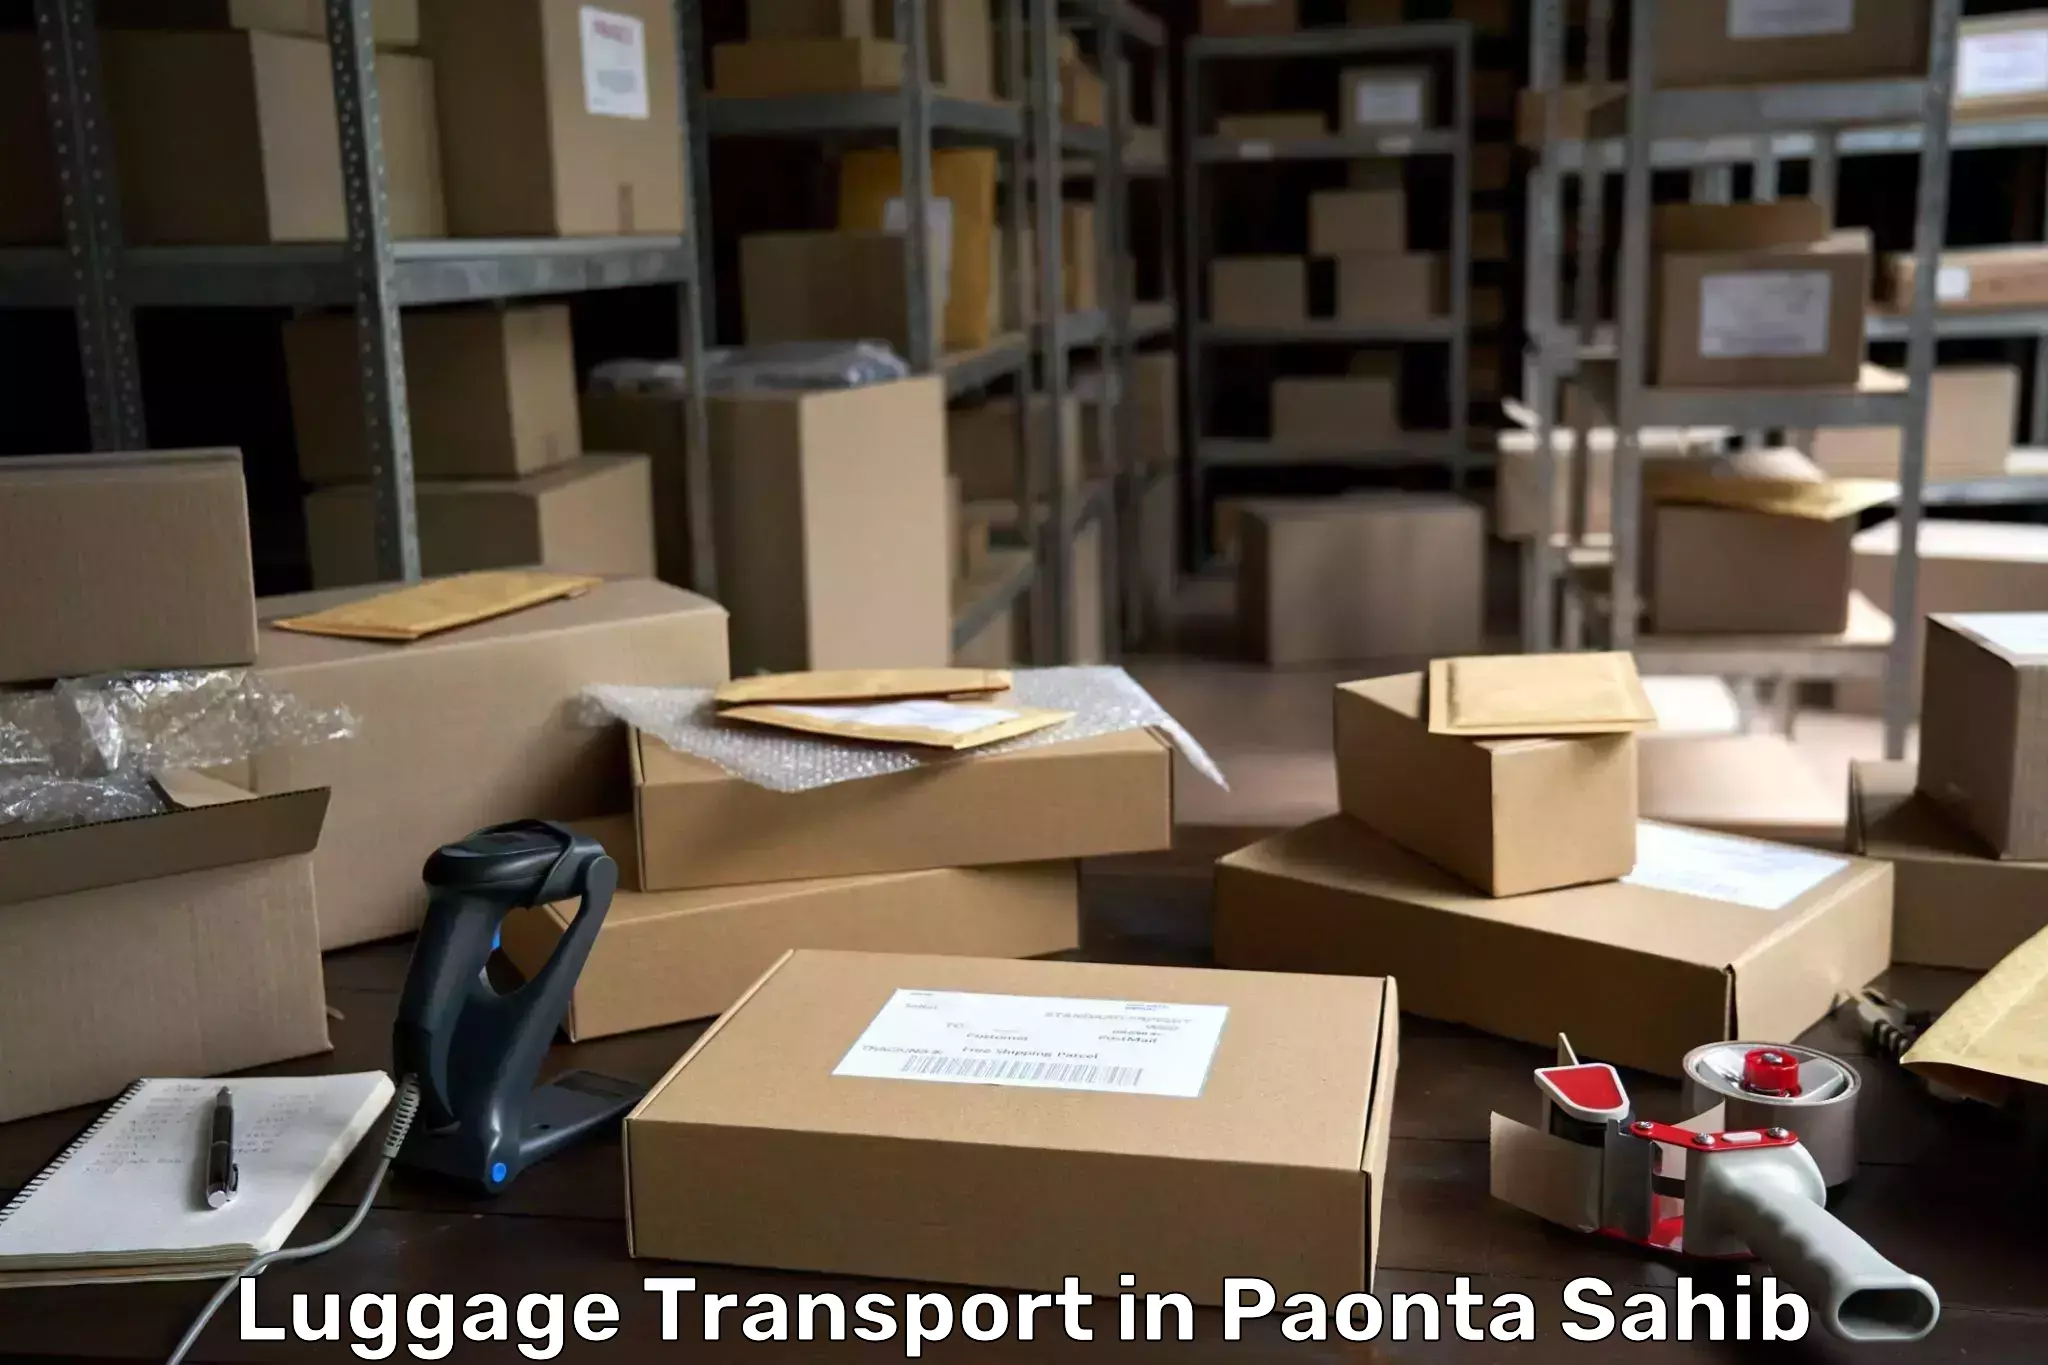 Domestic luggage transport in Paonta Sahib